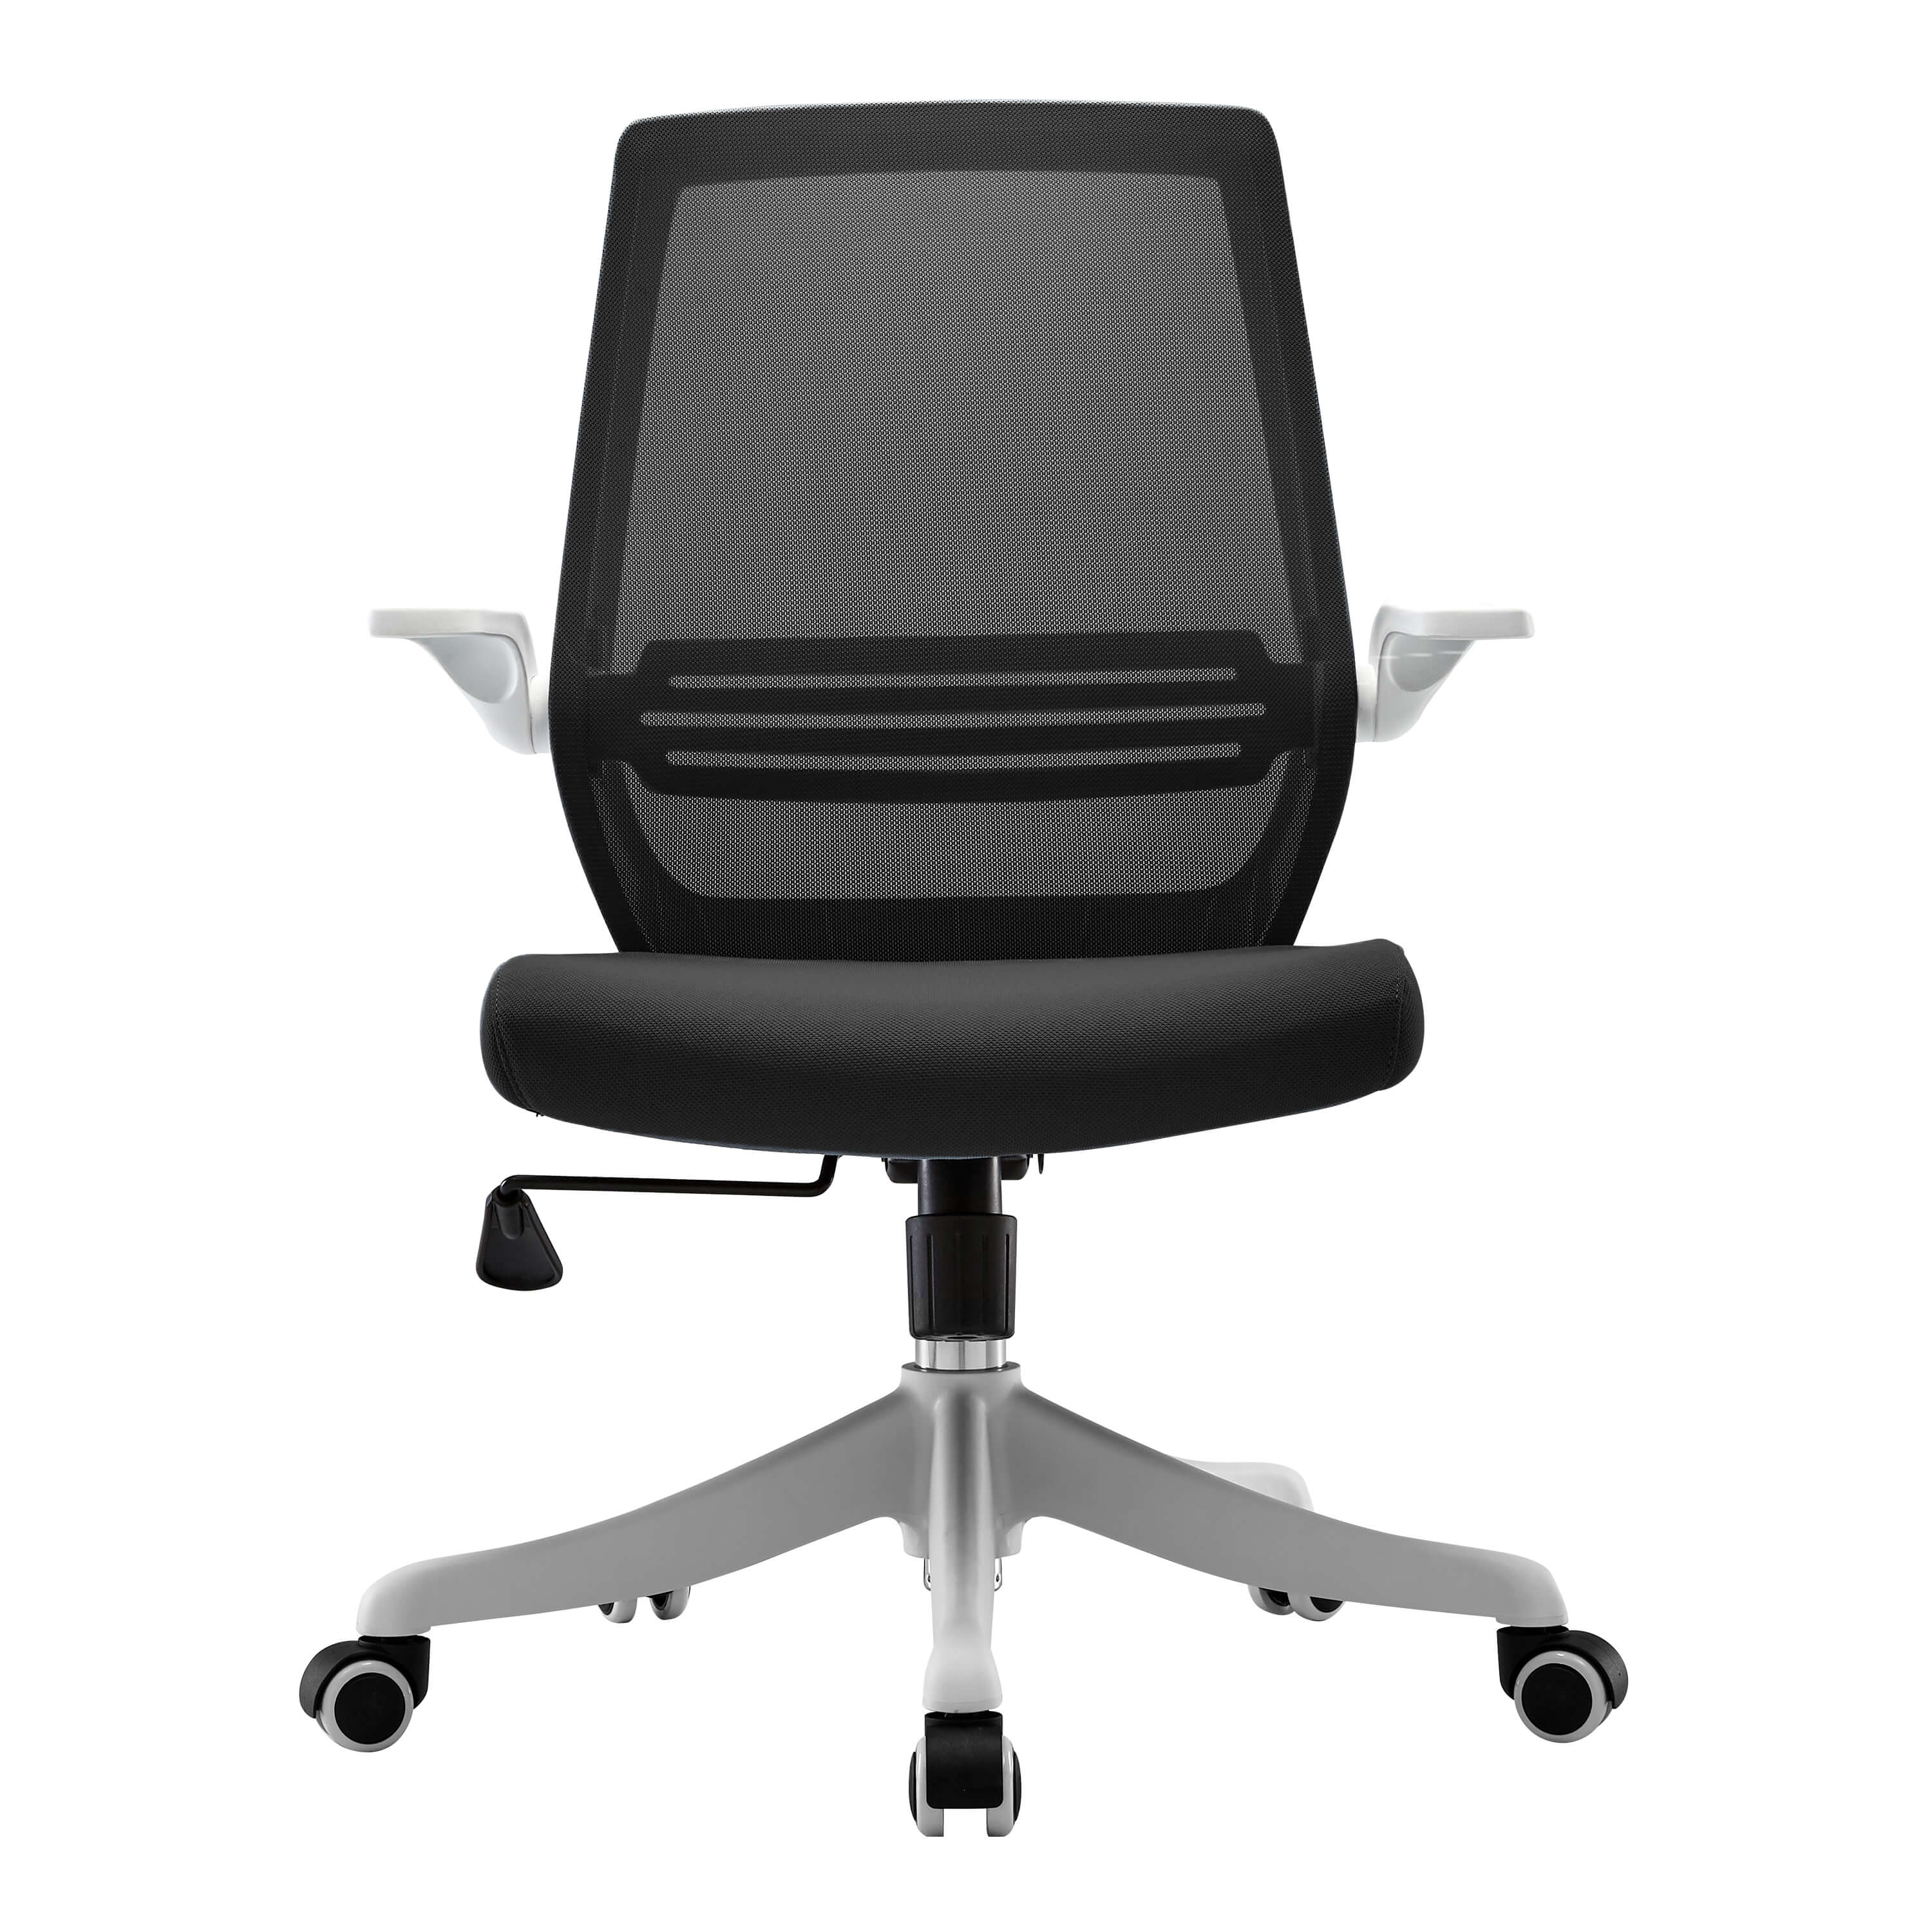 Sihoo M76 Ergonomic office chair